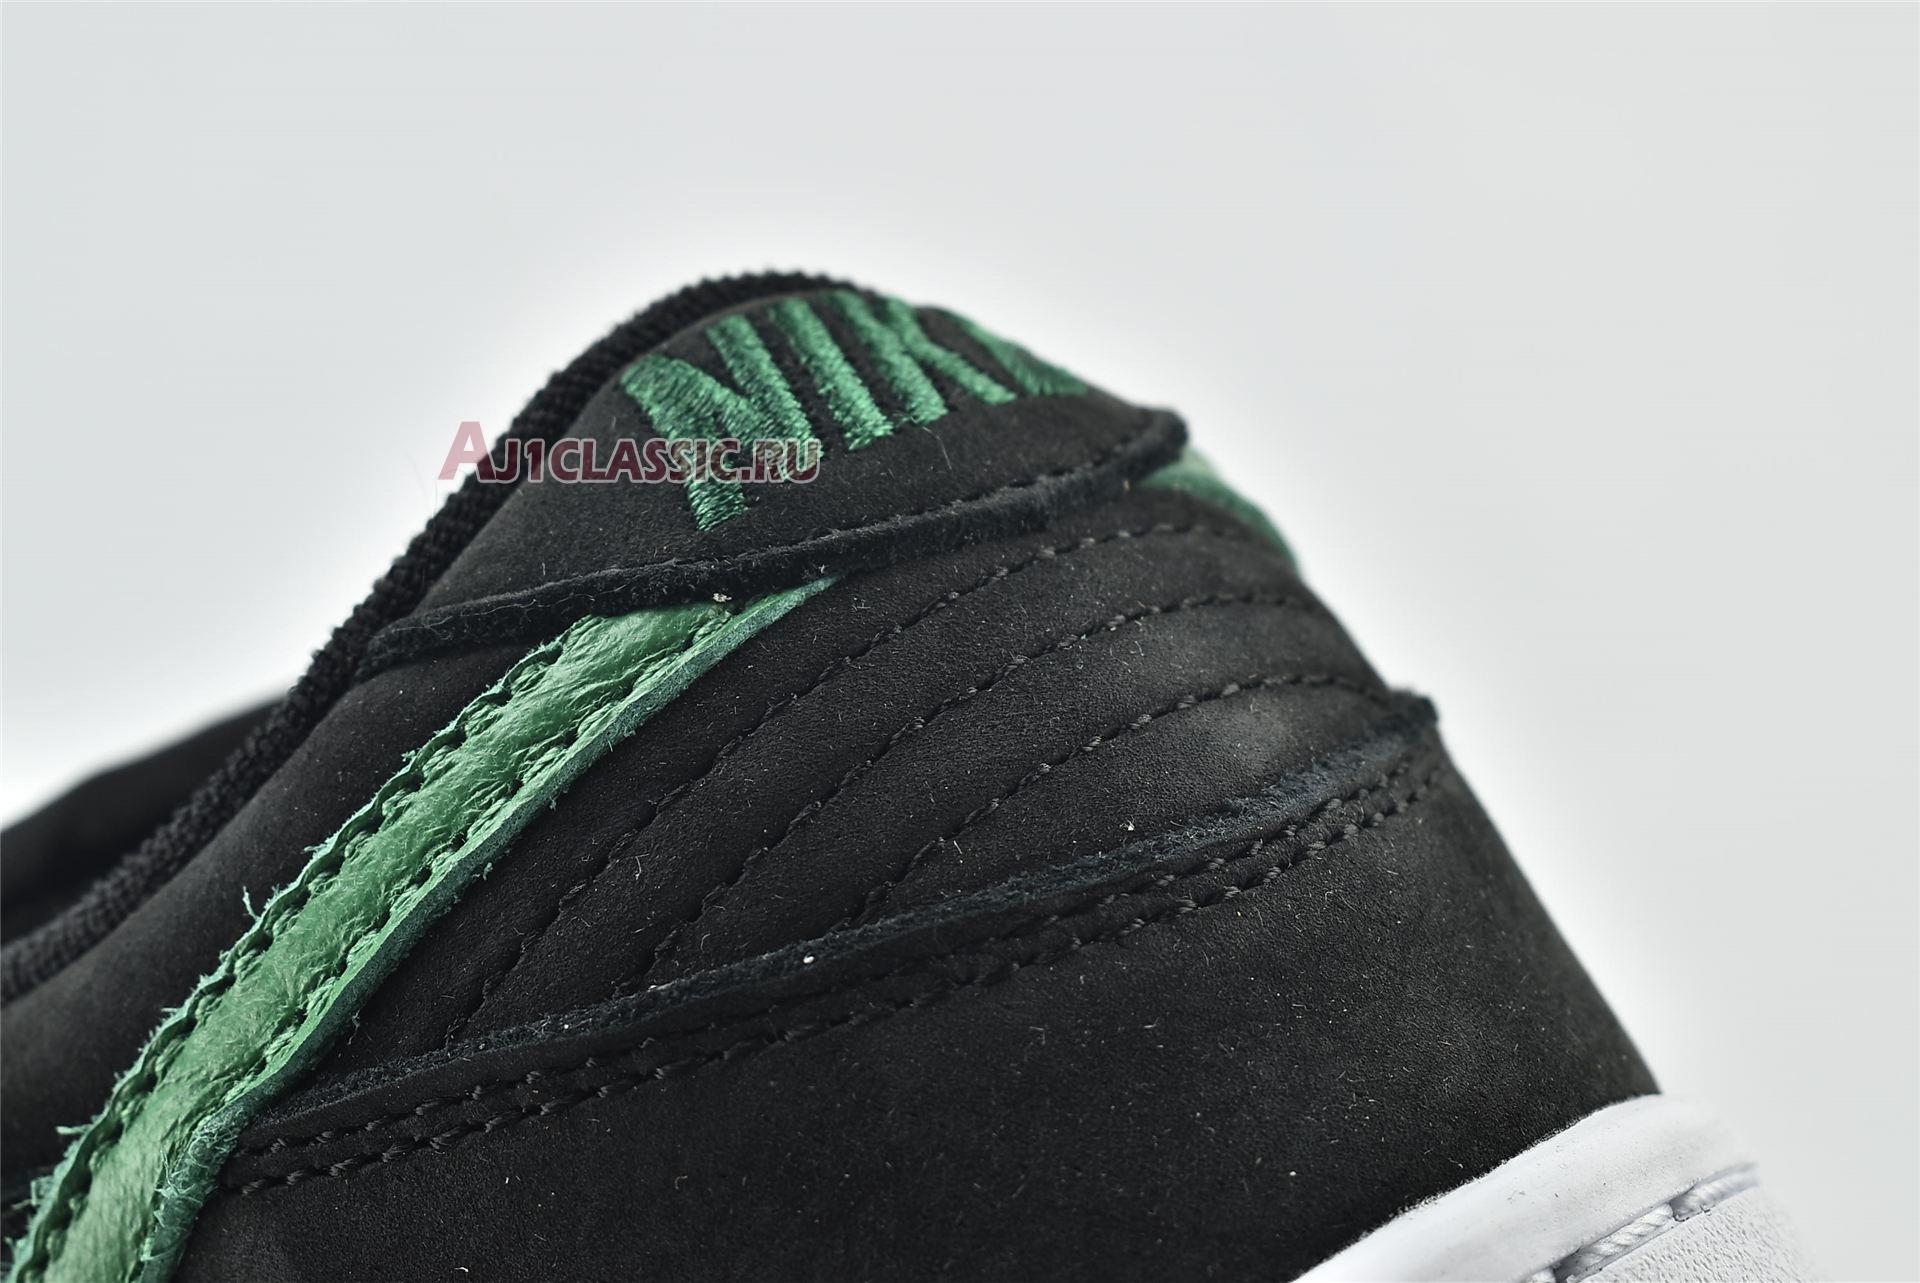 Nike Dunk Low Pro SB "Black Pine" BQ6817-005